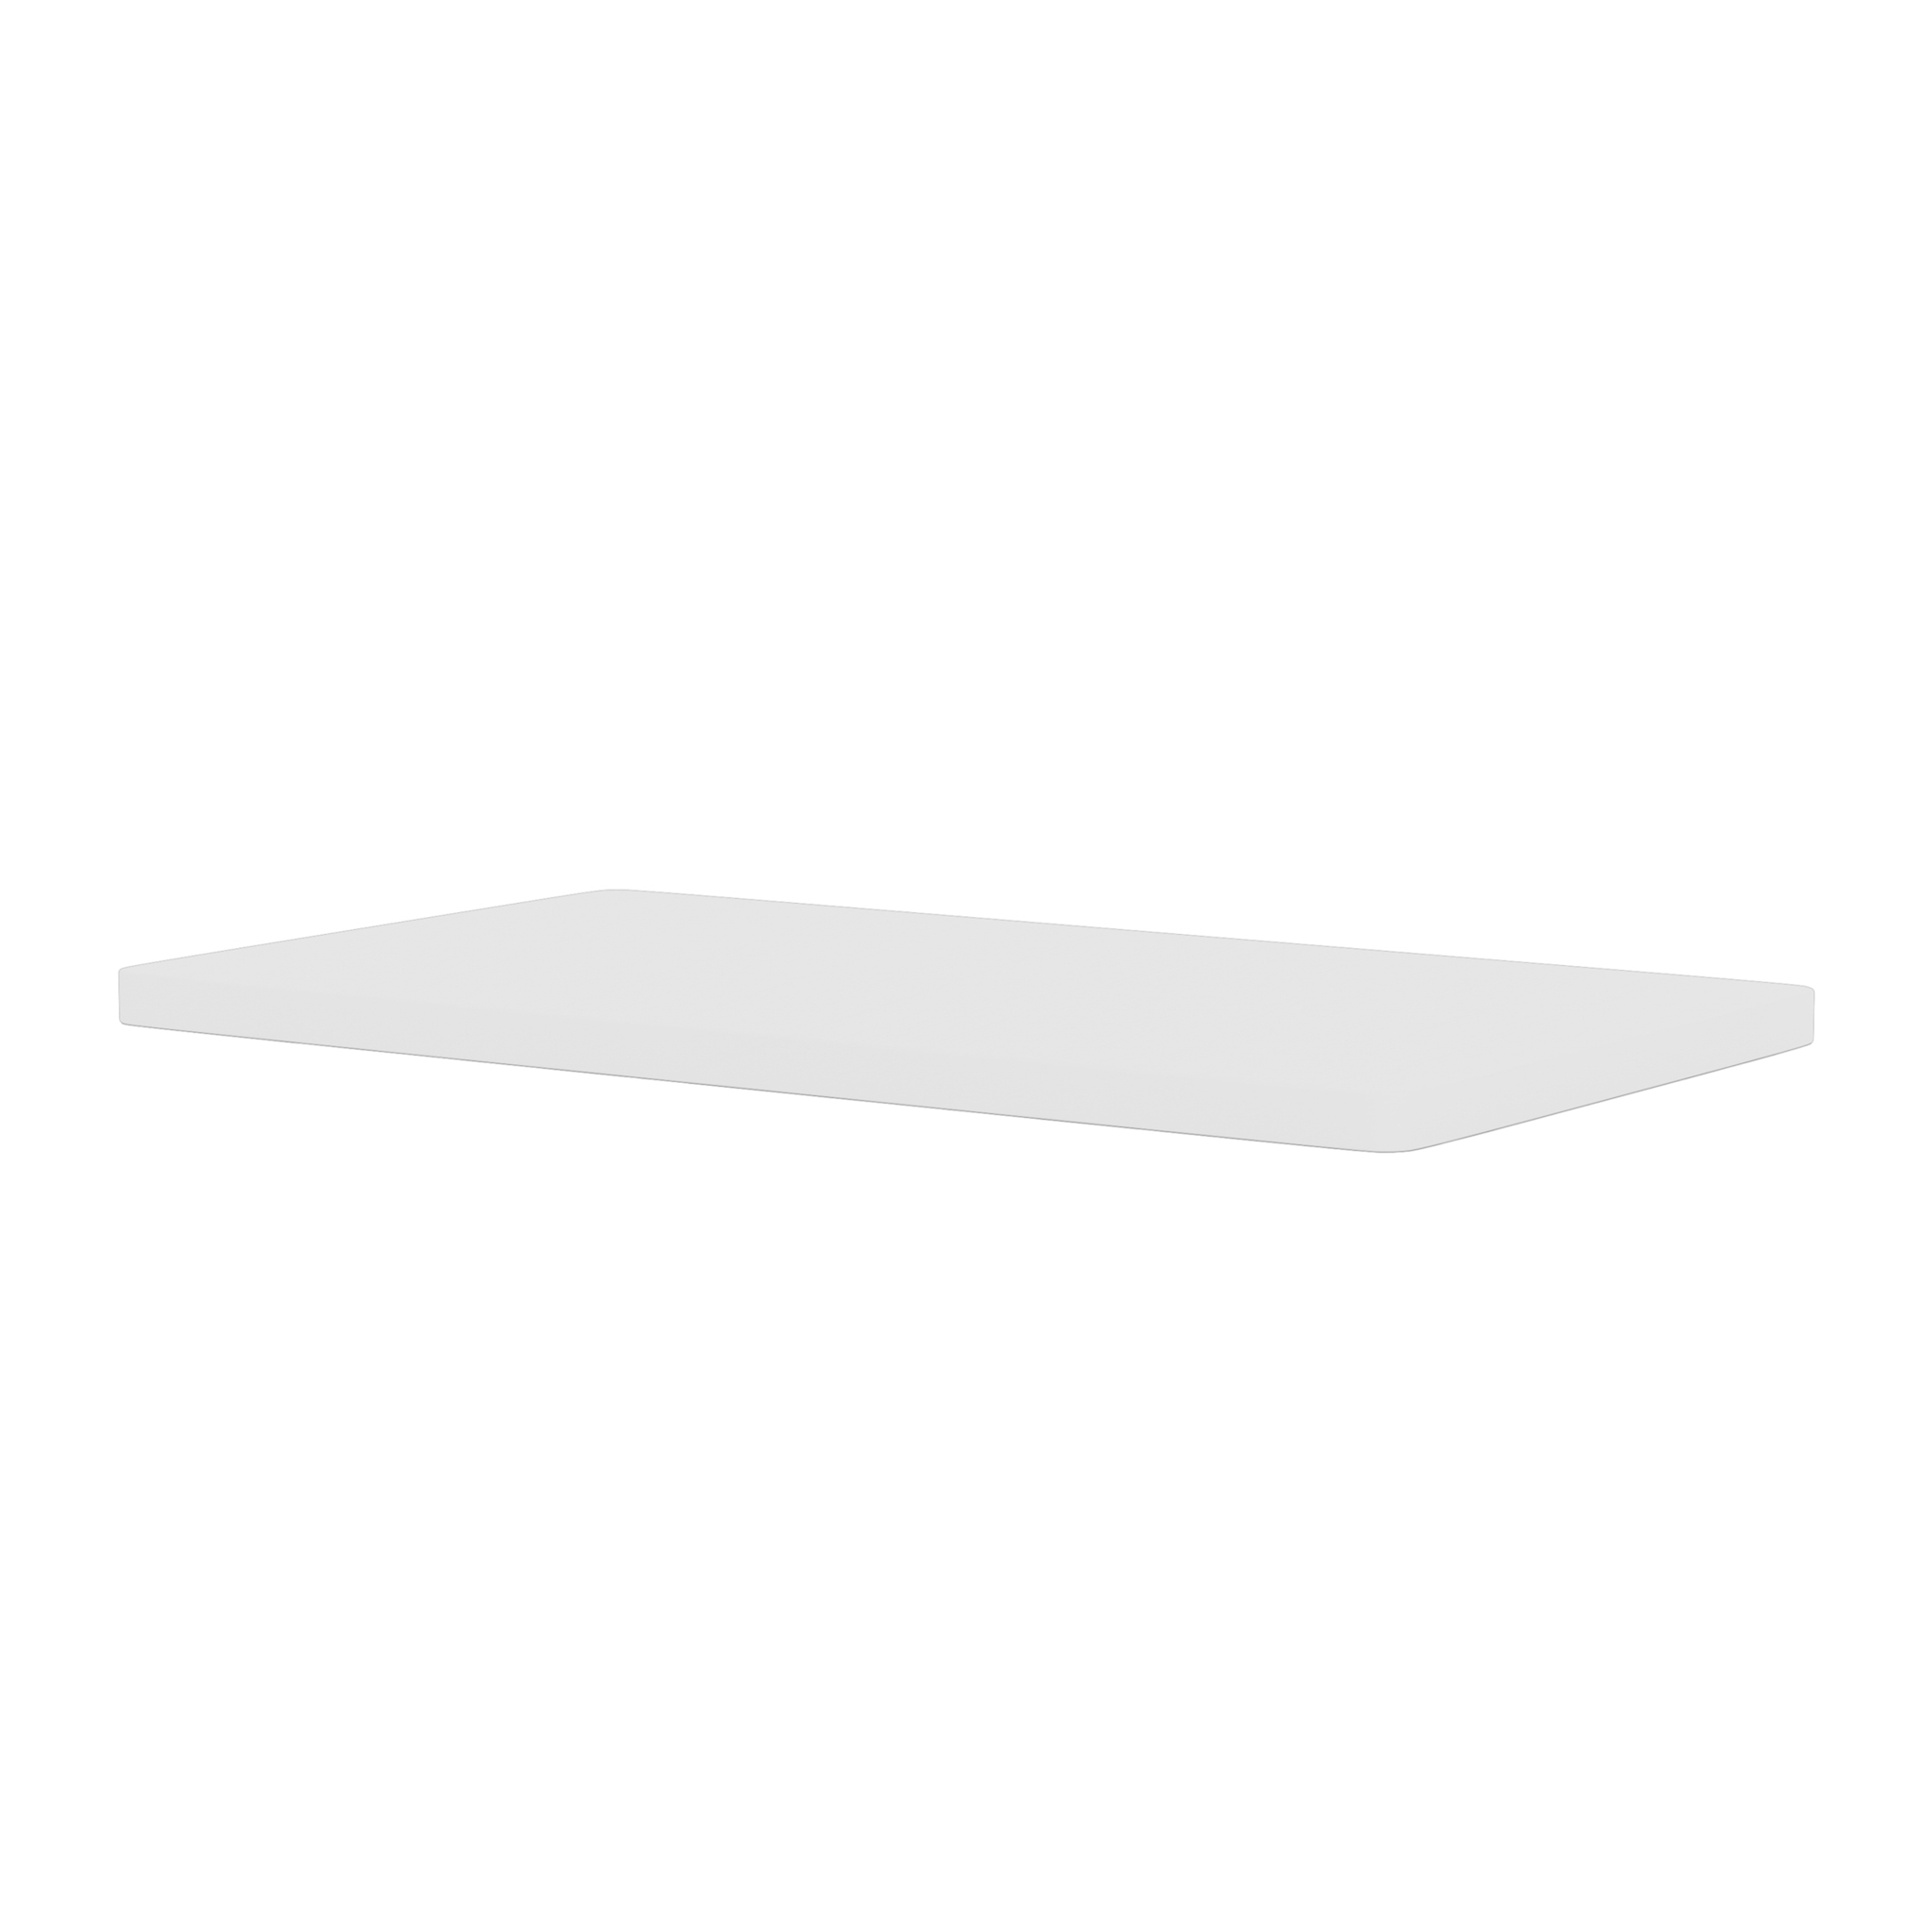 MONTANA // PANTON WIRE SINGLE INLAY SHELF - DEPTH 19cm | 101 NEW WHITE